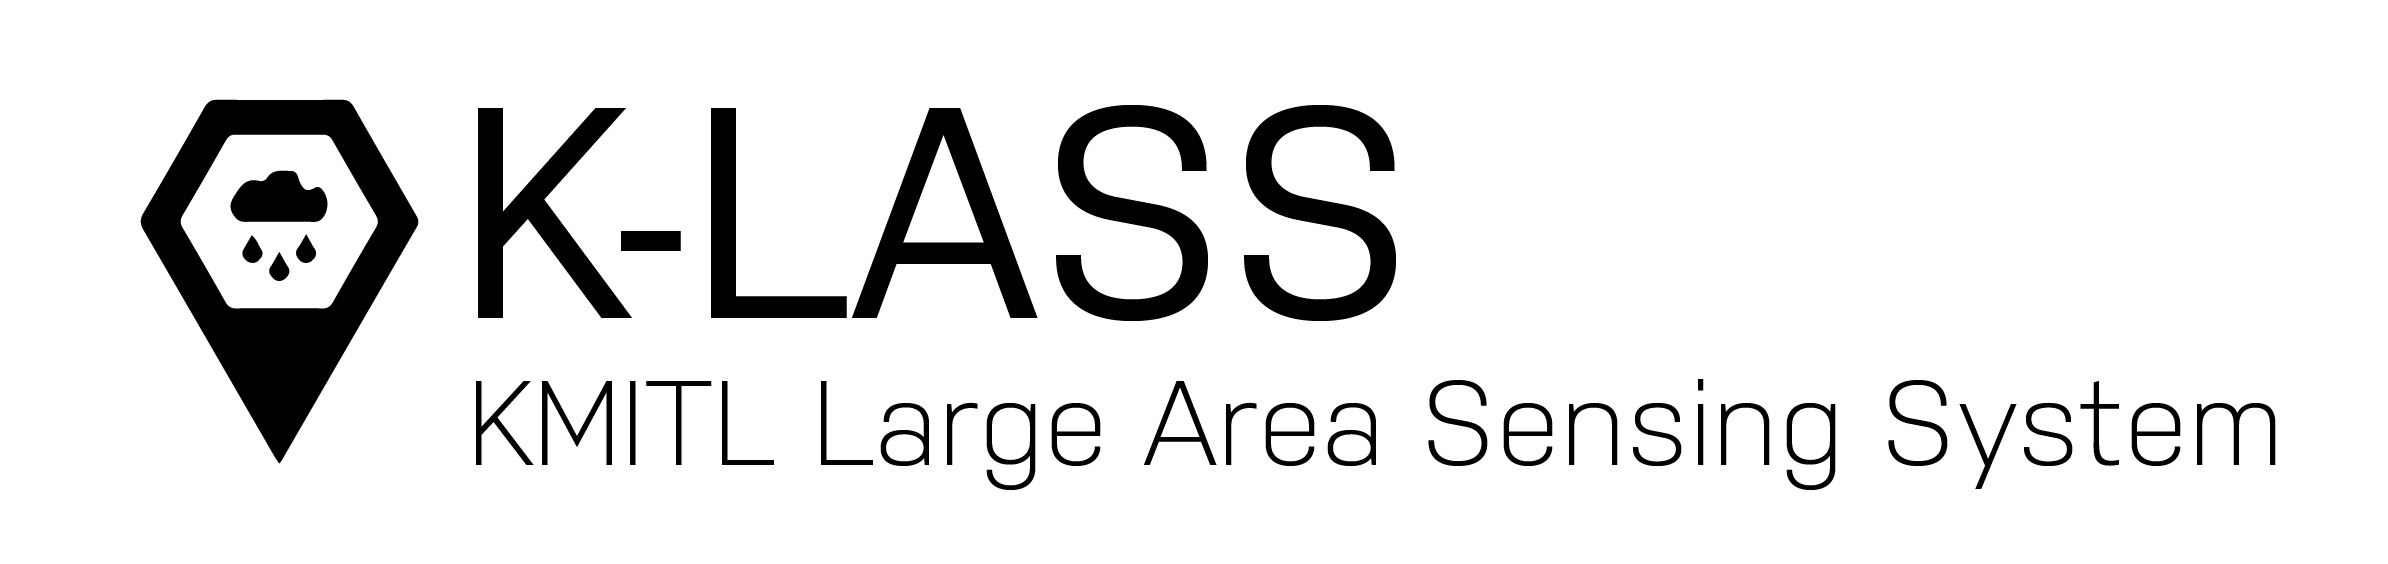 KLASS Logo